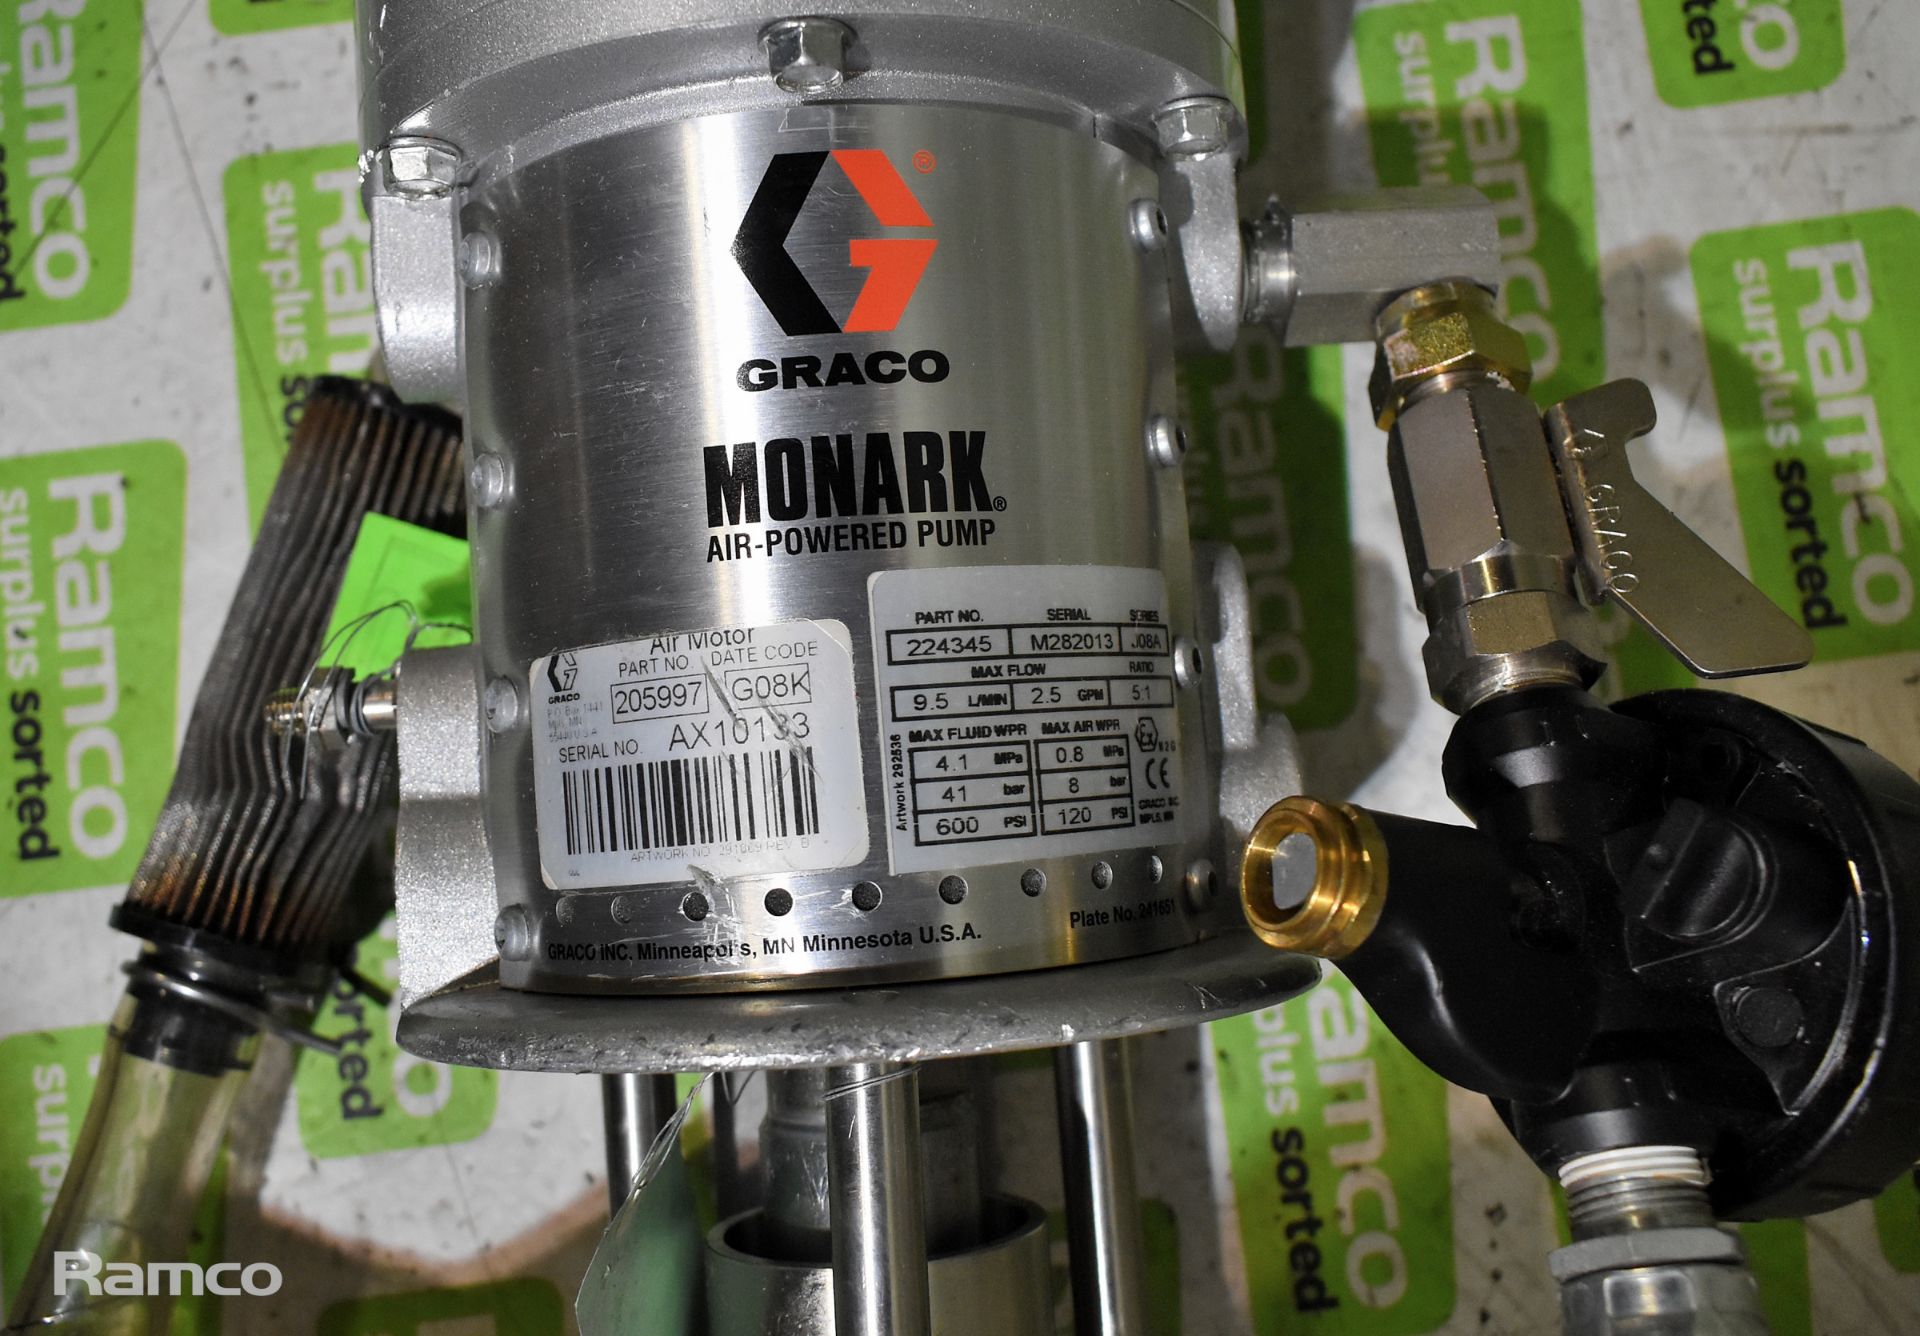 Graco Monark 205997 air powered drum pump - max flow: 9.5 L/min (2.5 GPM) - Image 3 of 6